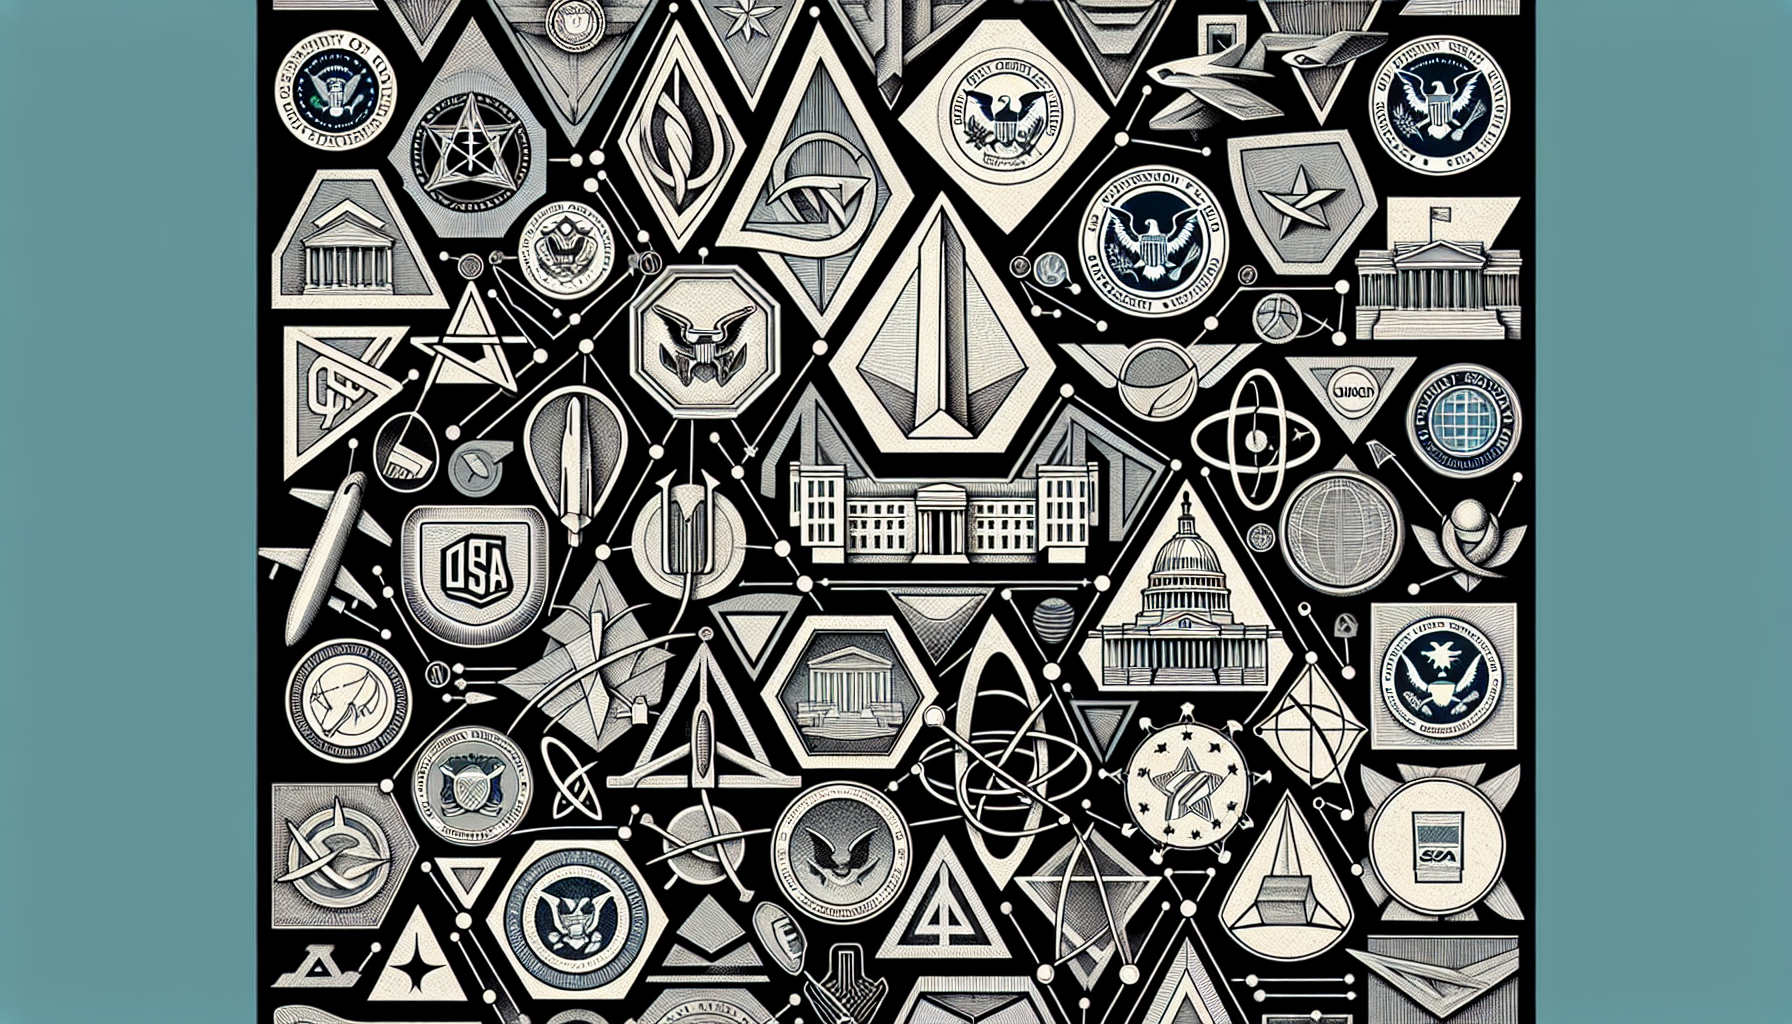 Illustration of federal agency symbols